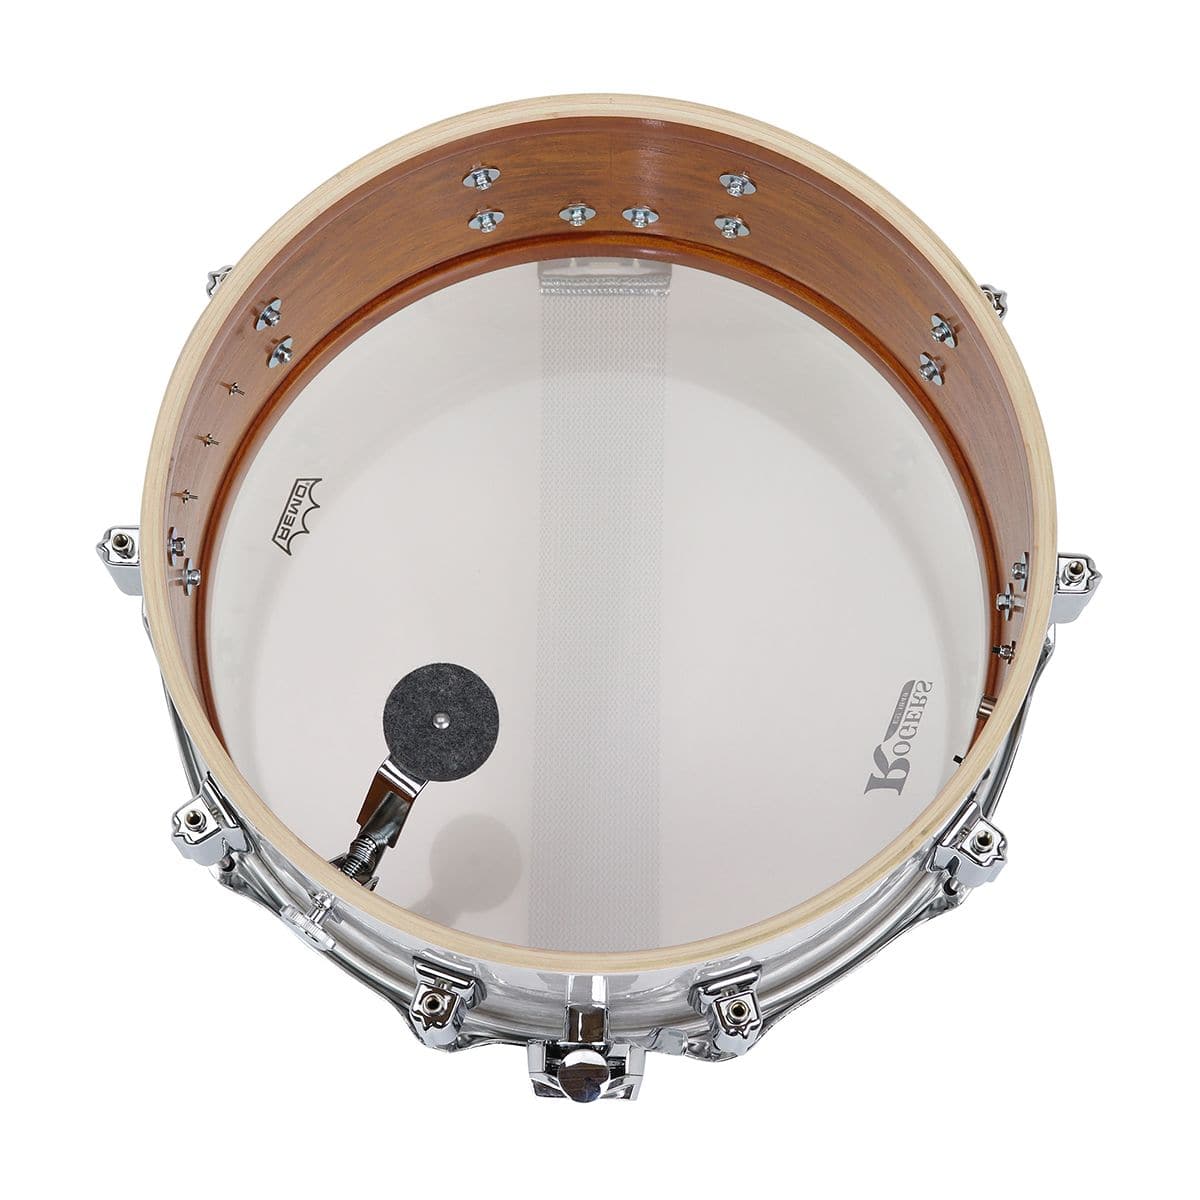 Rogers SuperTen Wood Shell Snare Drum 14x6.5 Black Diamond Pearl